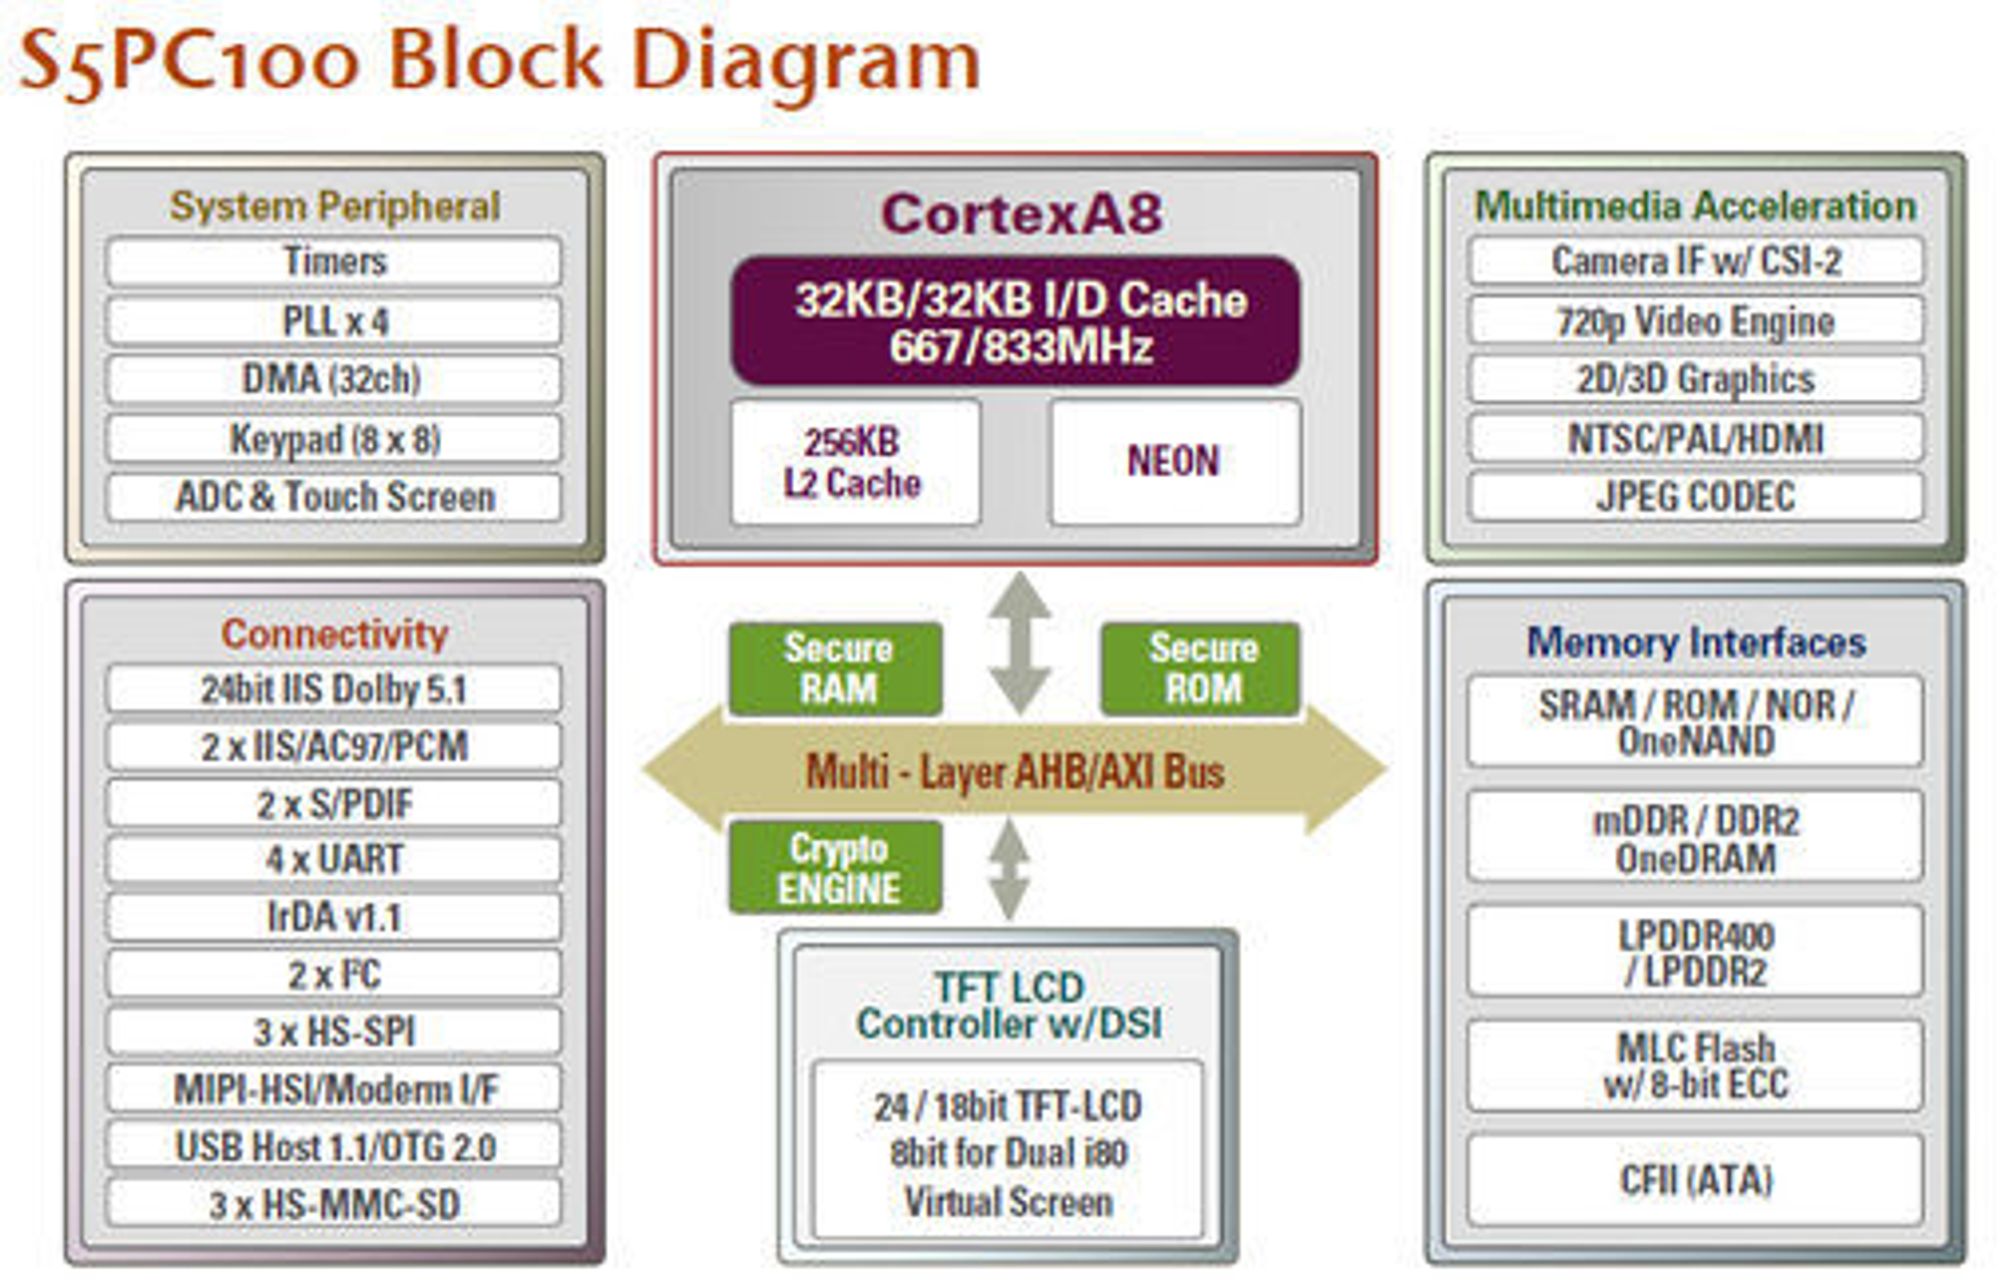 Blokkdiagram over Samsung S5PC100.